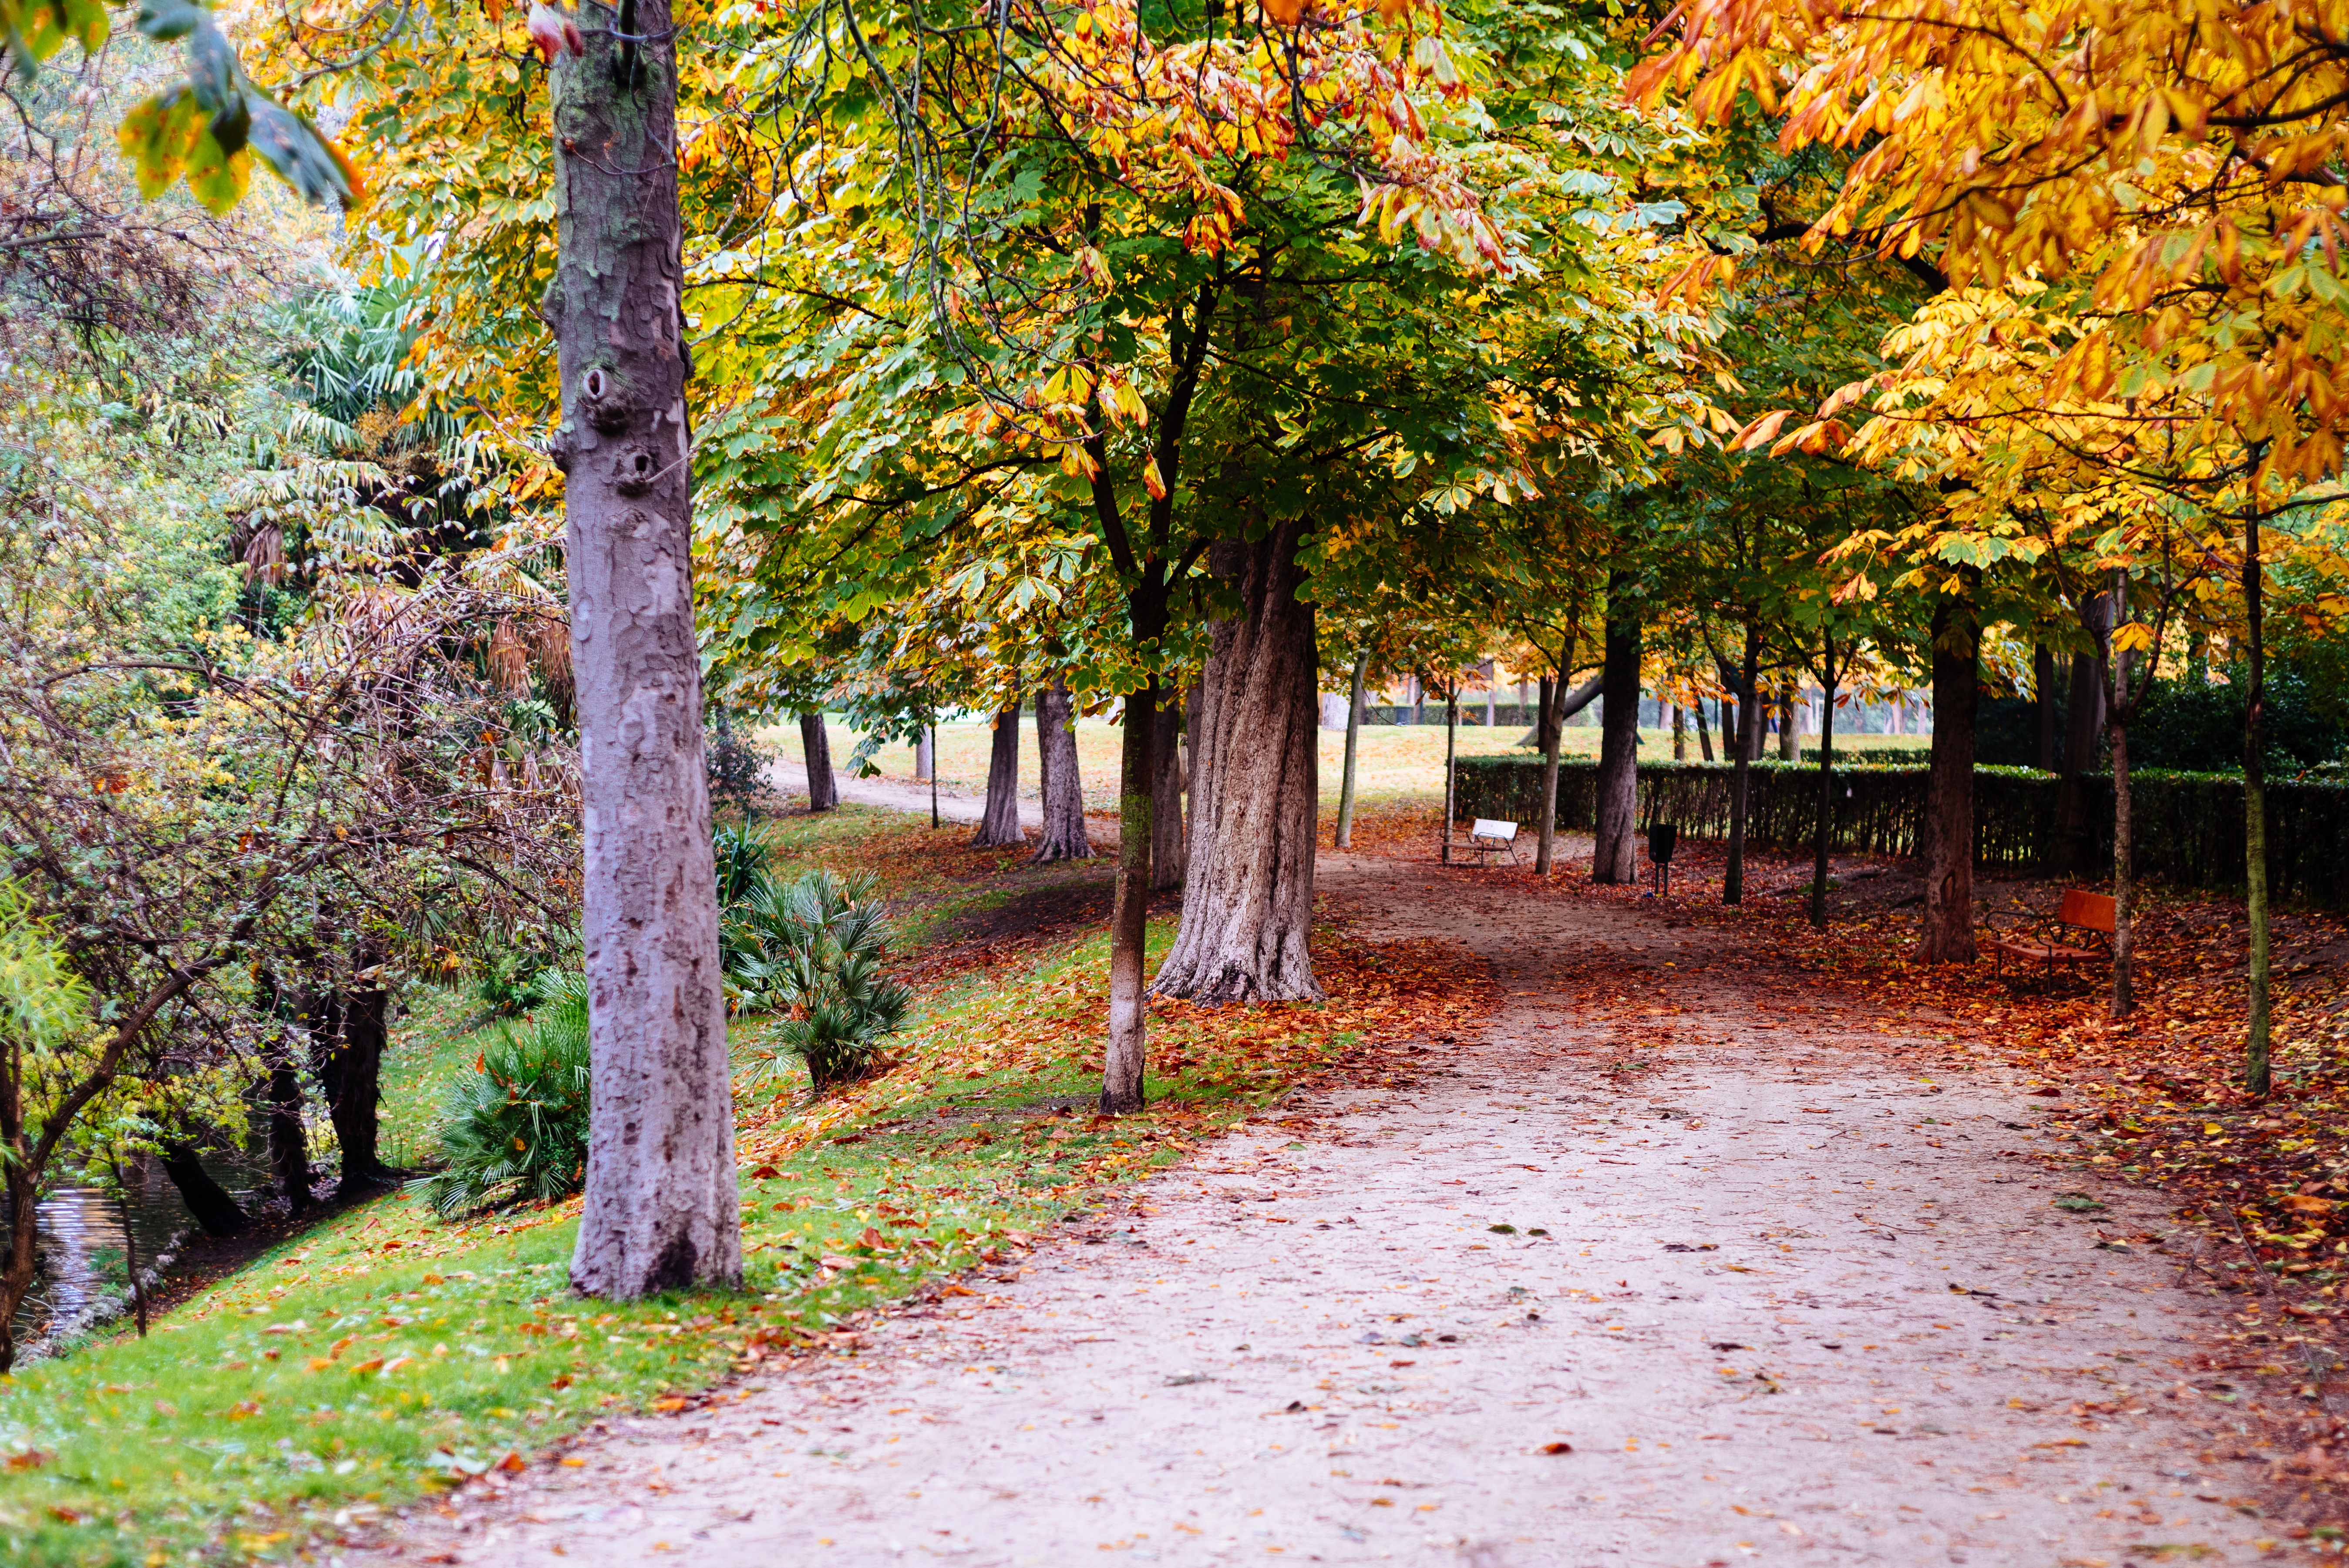 El parque del Retiro, en Madrid, en pleno otoño.